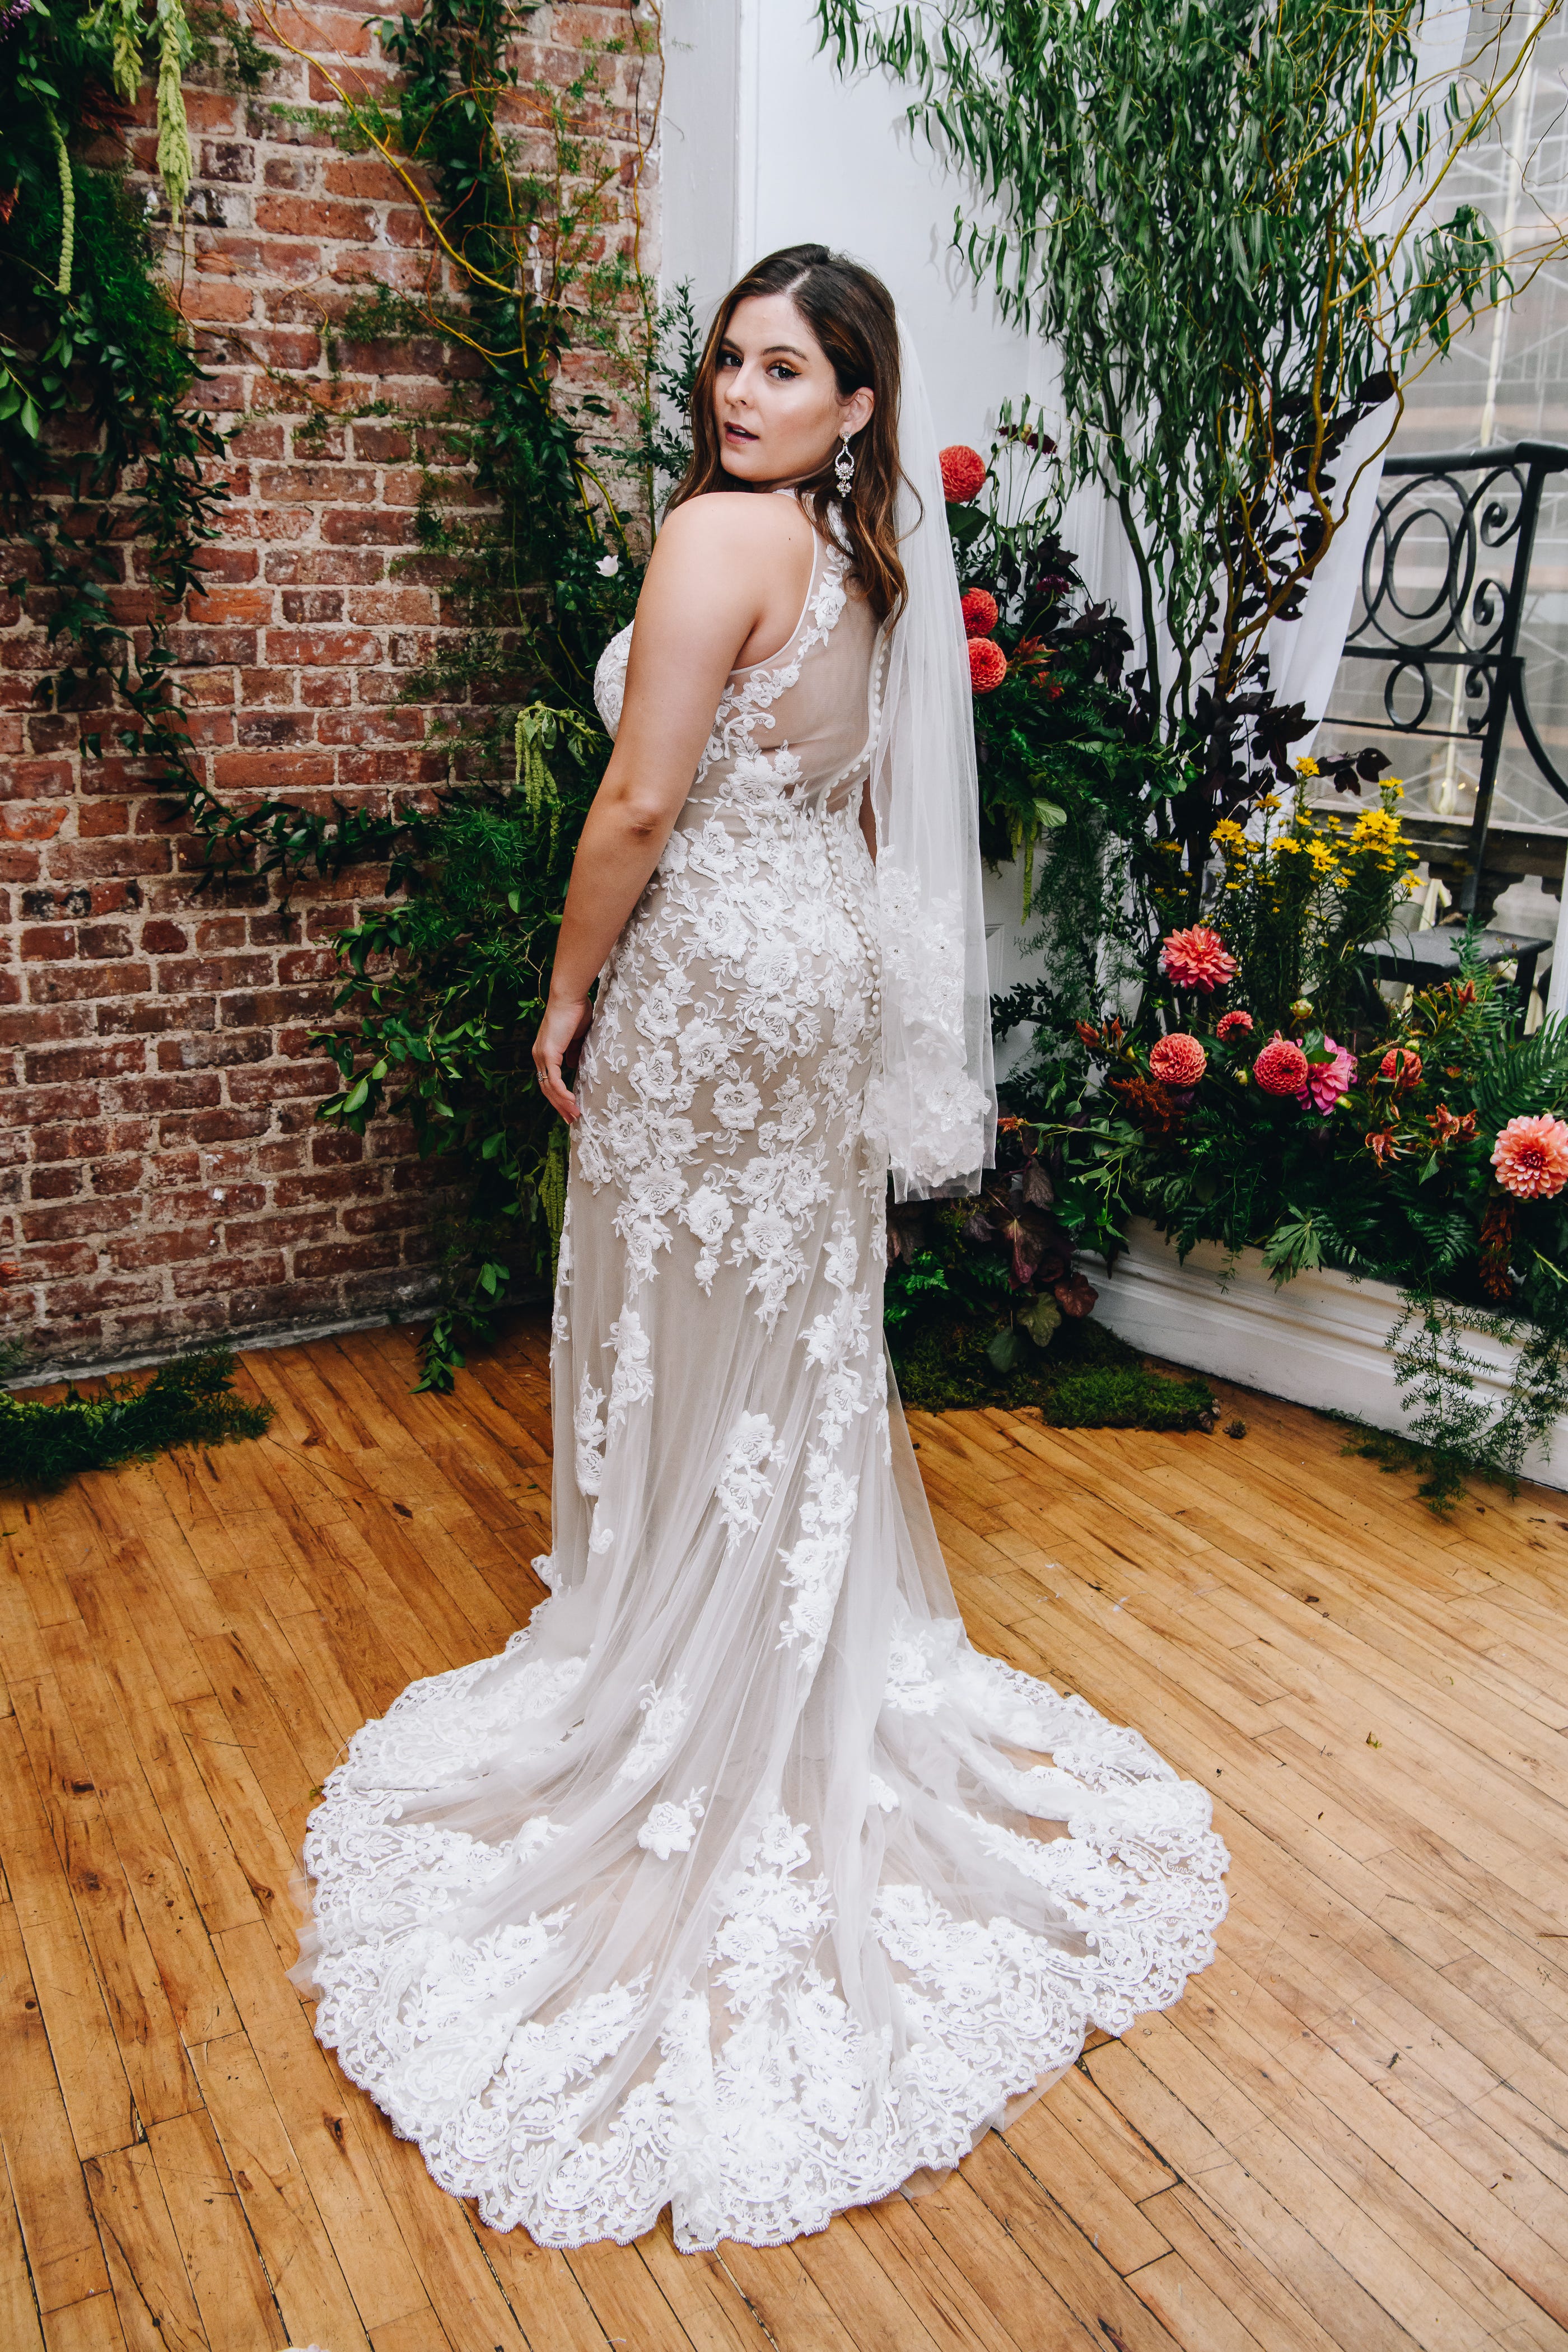 david's bridal $99 sale 2019